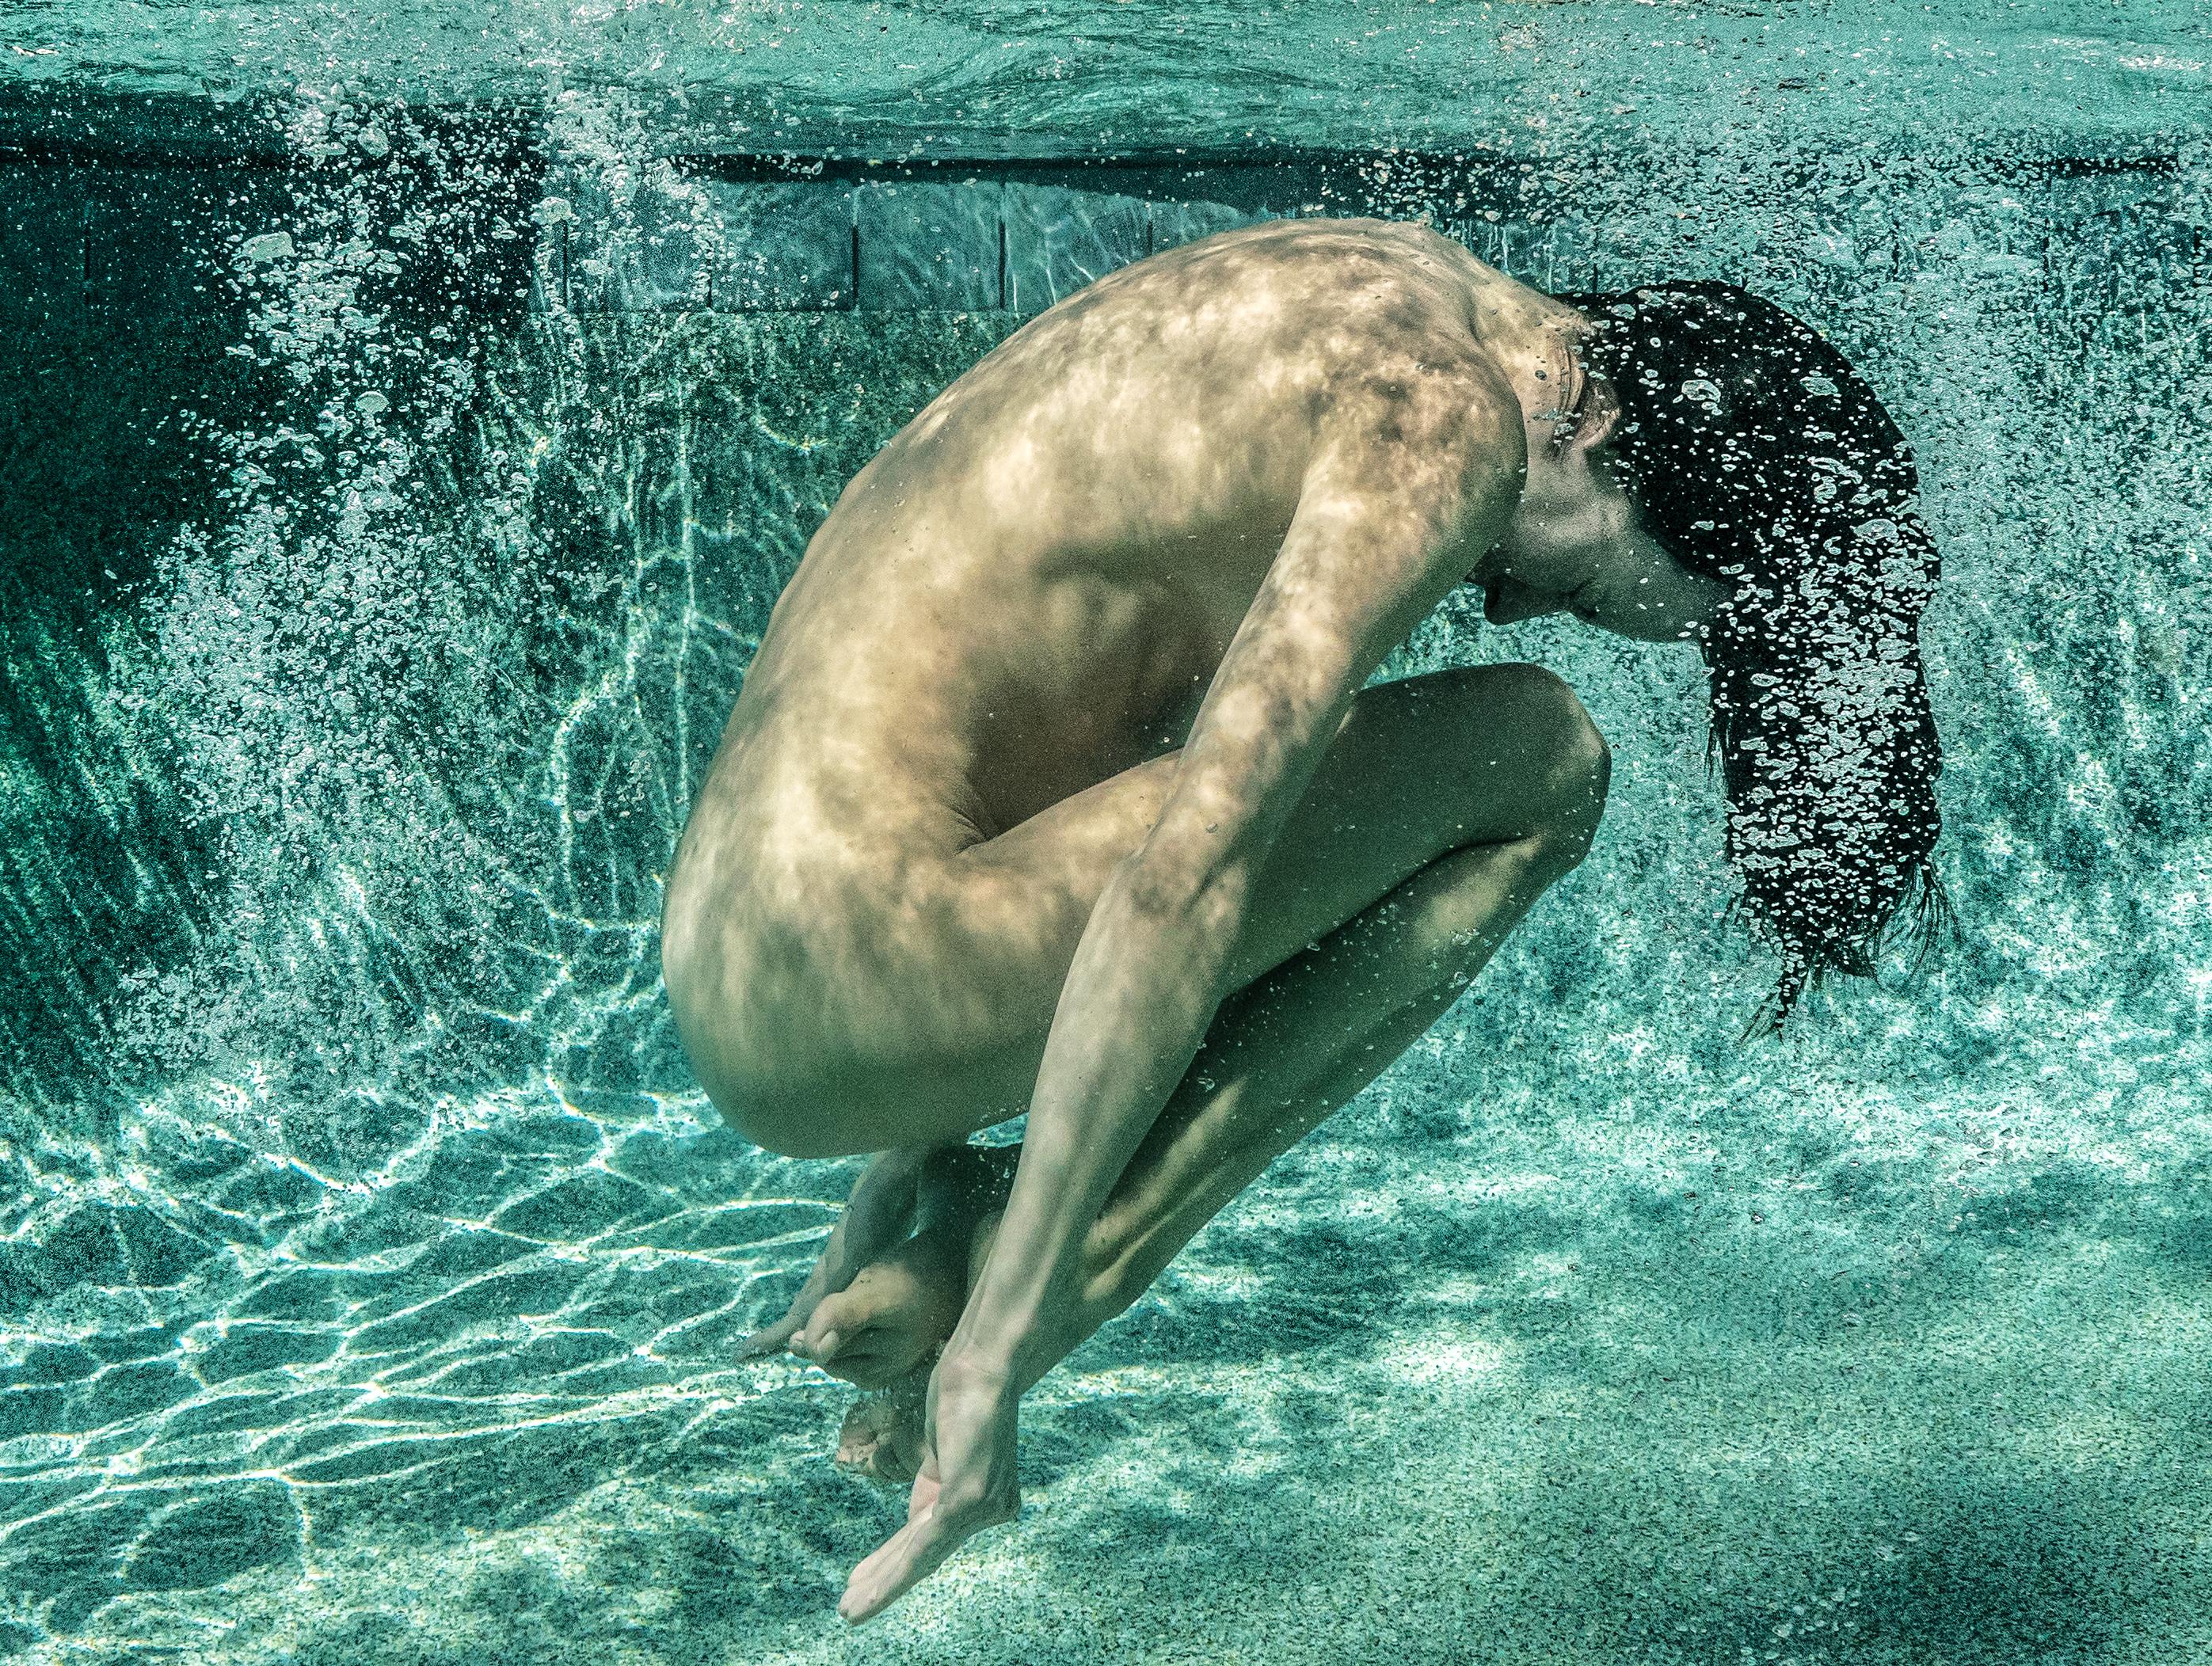 Green Roll III - underwater nude photograph - archival pigment print 18